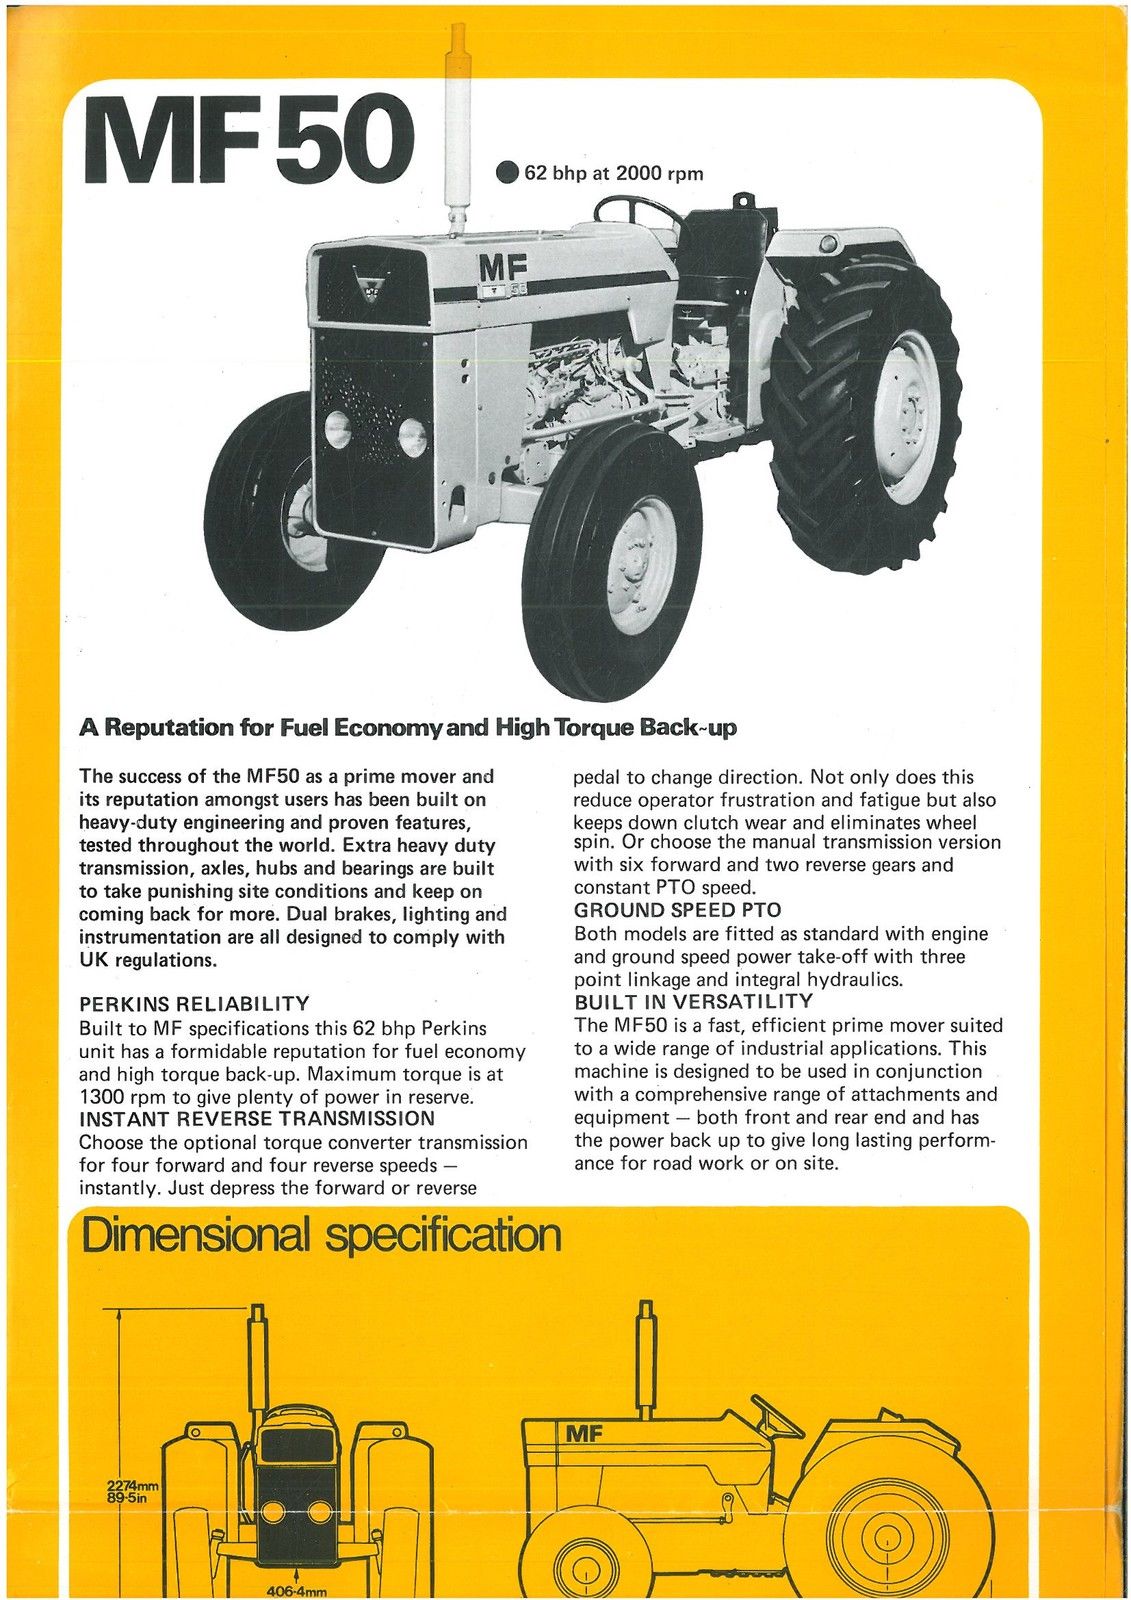 Pin Massey Ferguson Mf20 Tractor For Sale on Pinterest